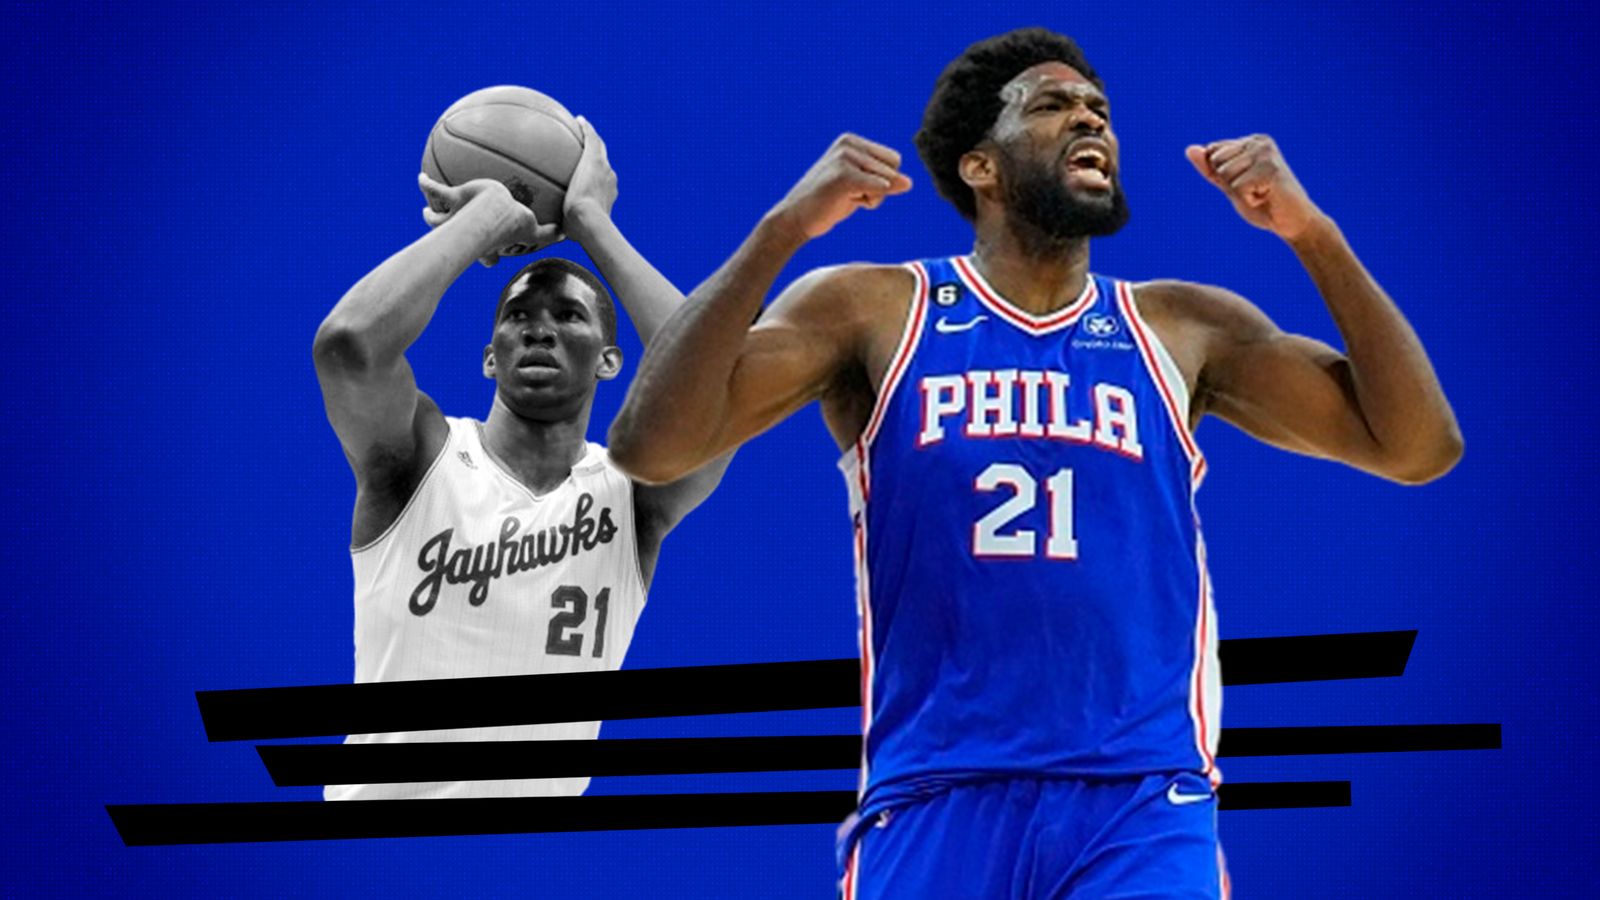 NBA News: Philadelphia 76ers’ Joel Embiid’s Actions Spark Debate on Officiating Consistency